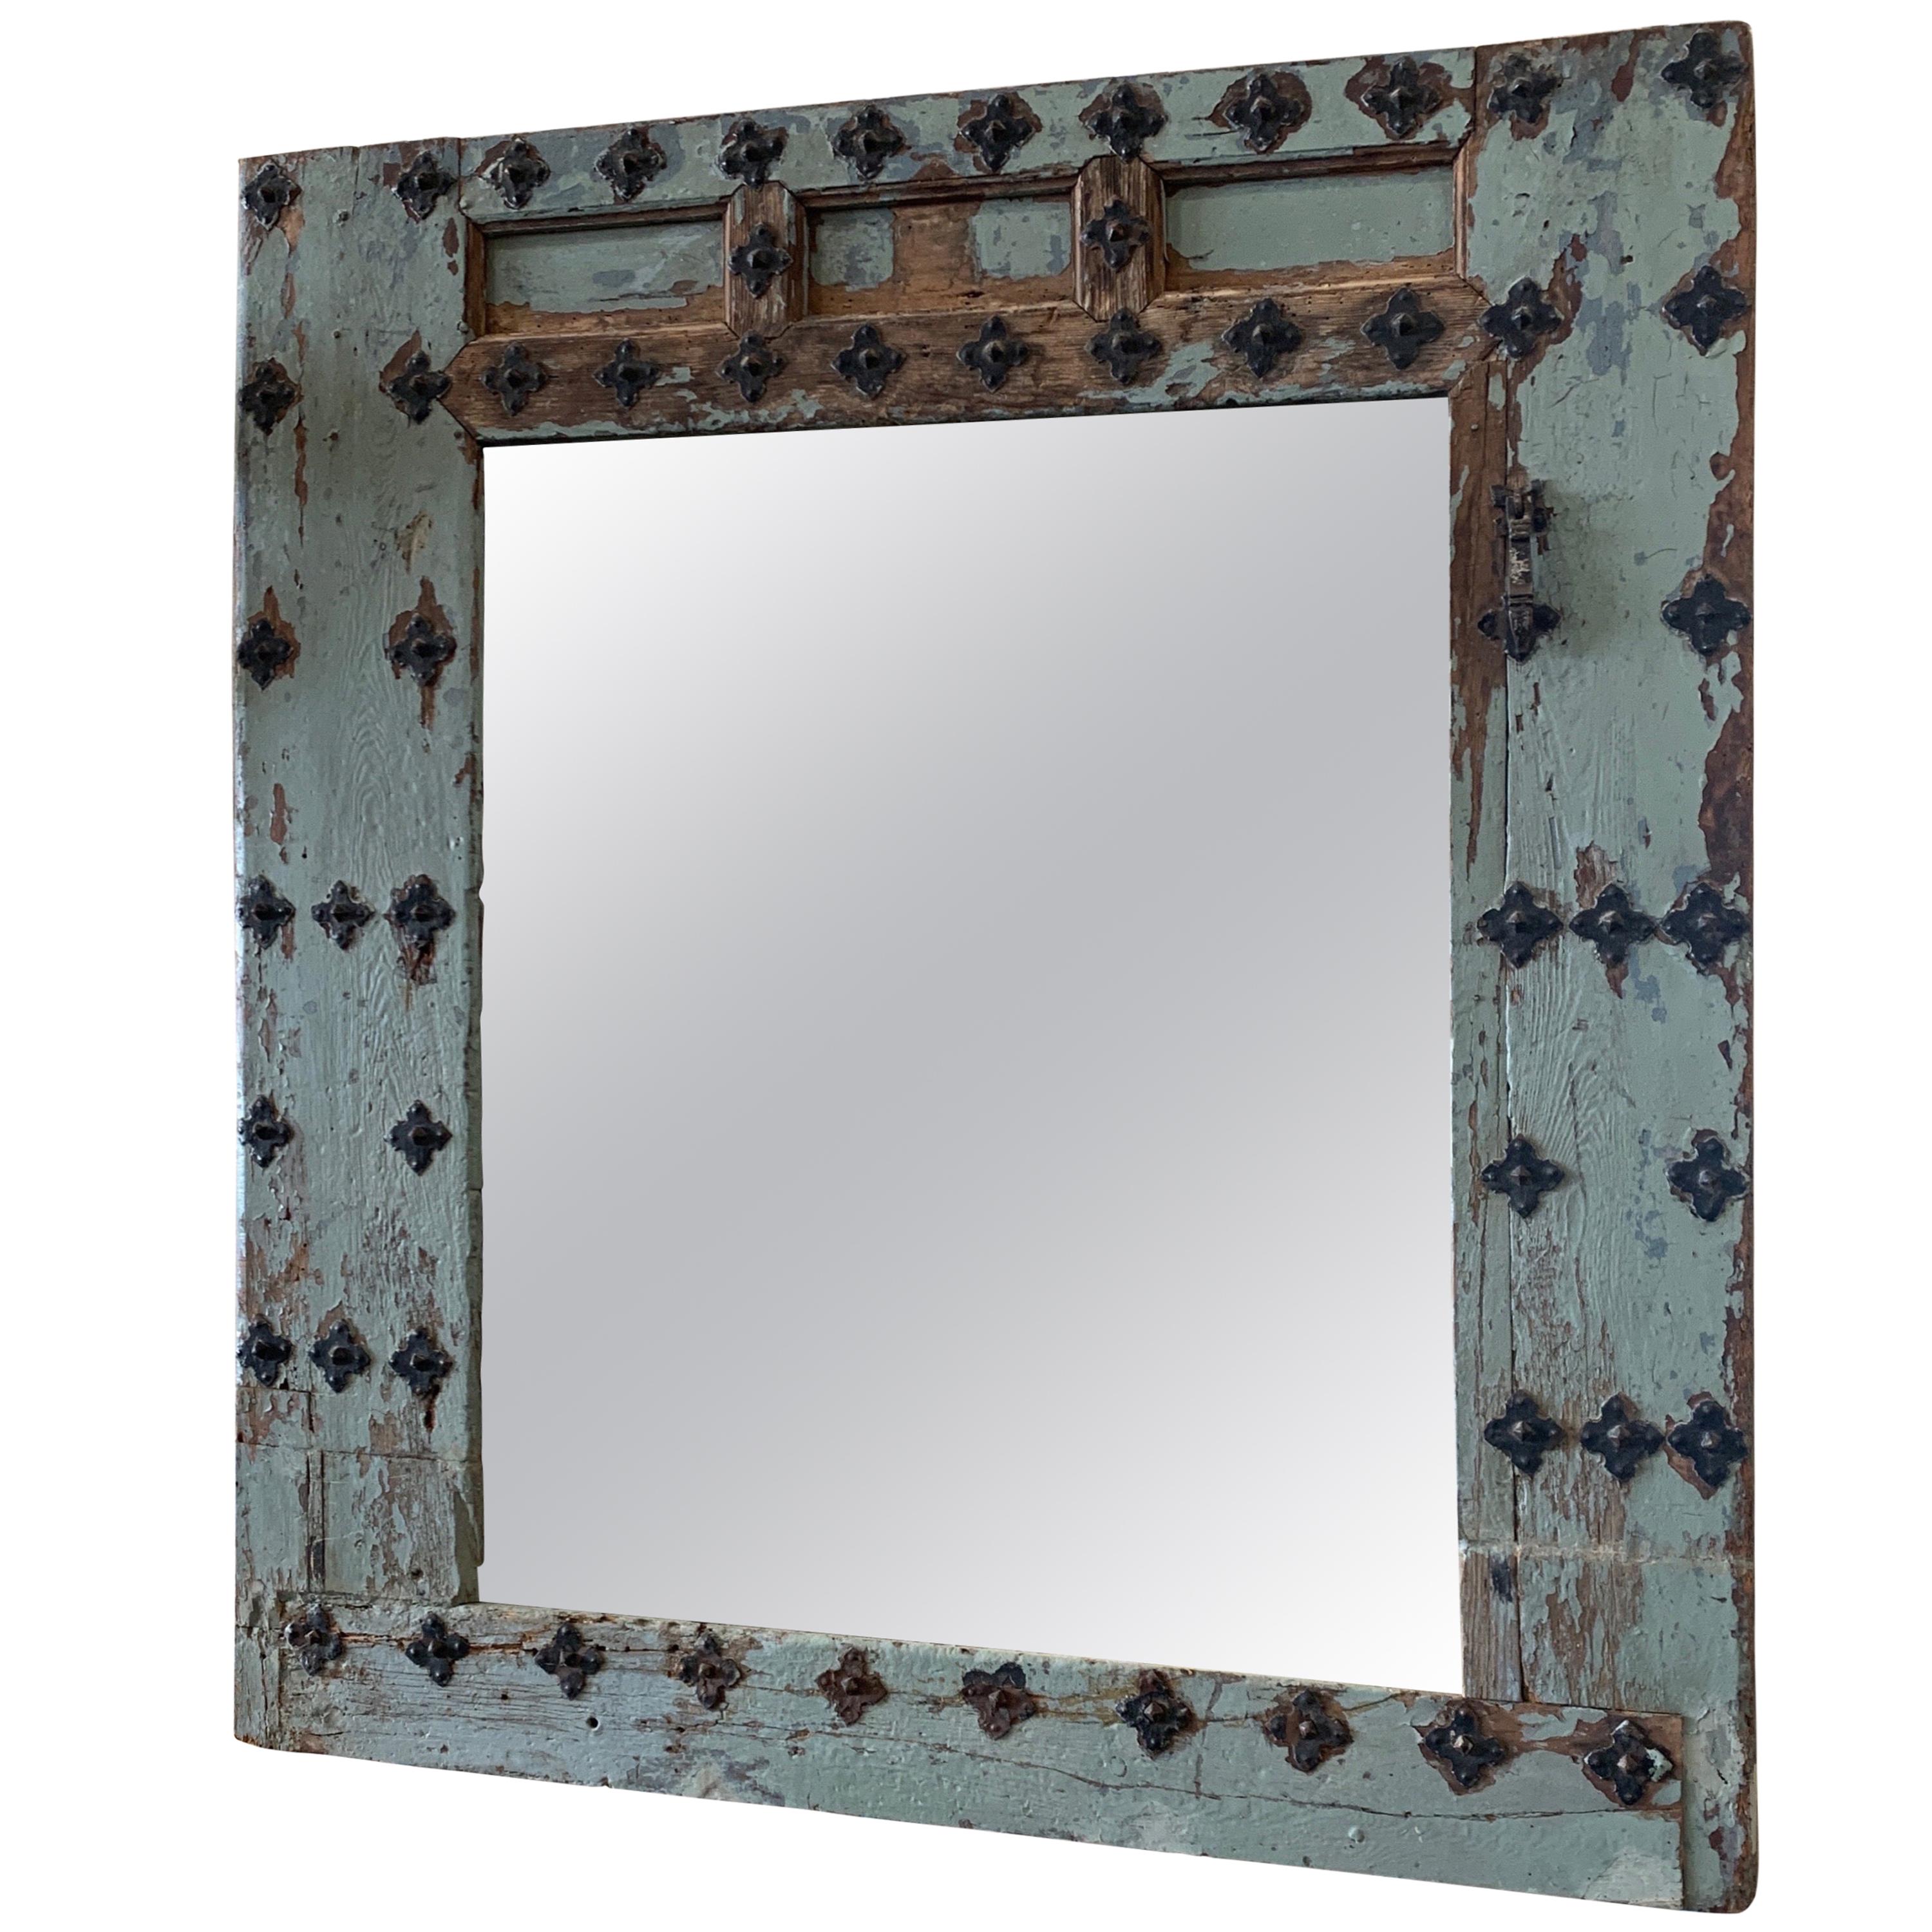 17th Century Spanish Door Frame Mirror with Original Hardware